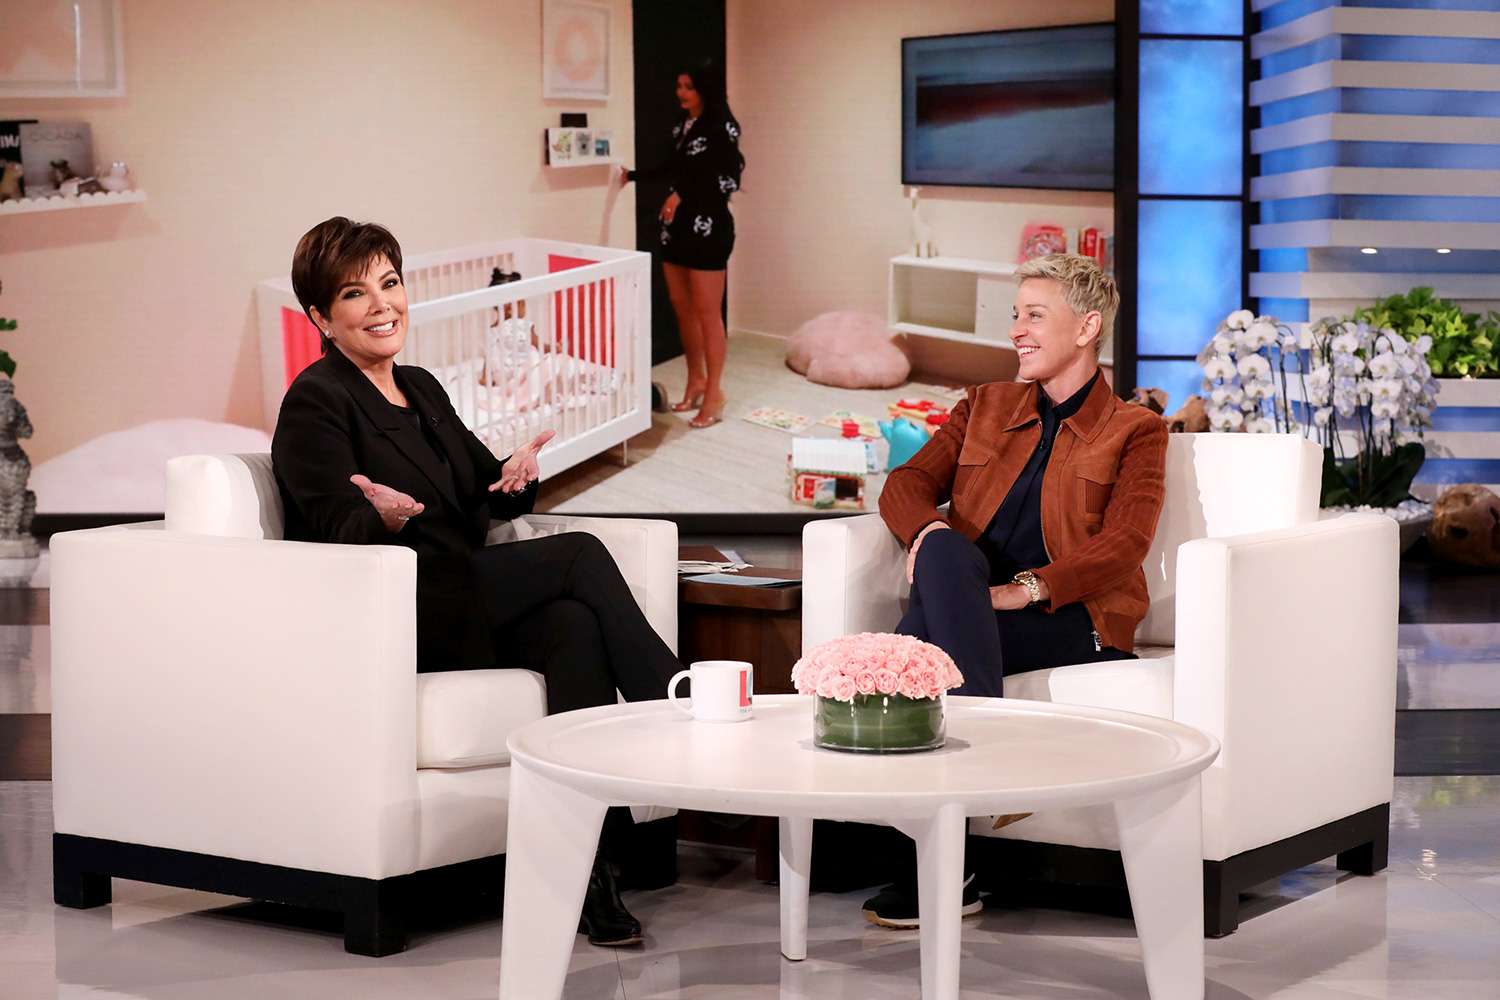 The matriarch of the Kardashian-Jenner family, Kris Jenner, makes an appearance on &ldquo;The Ellen DeGeneres Show&rdquo; airing Thursday, February 27th